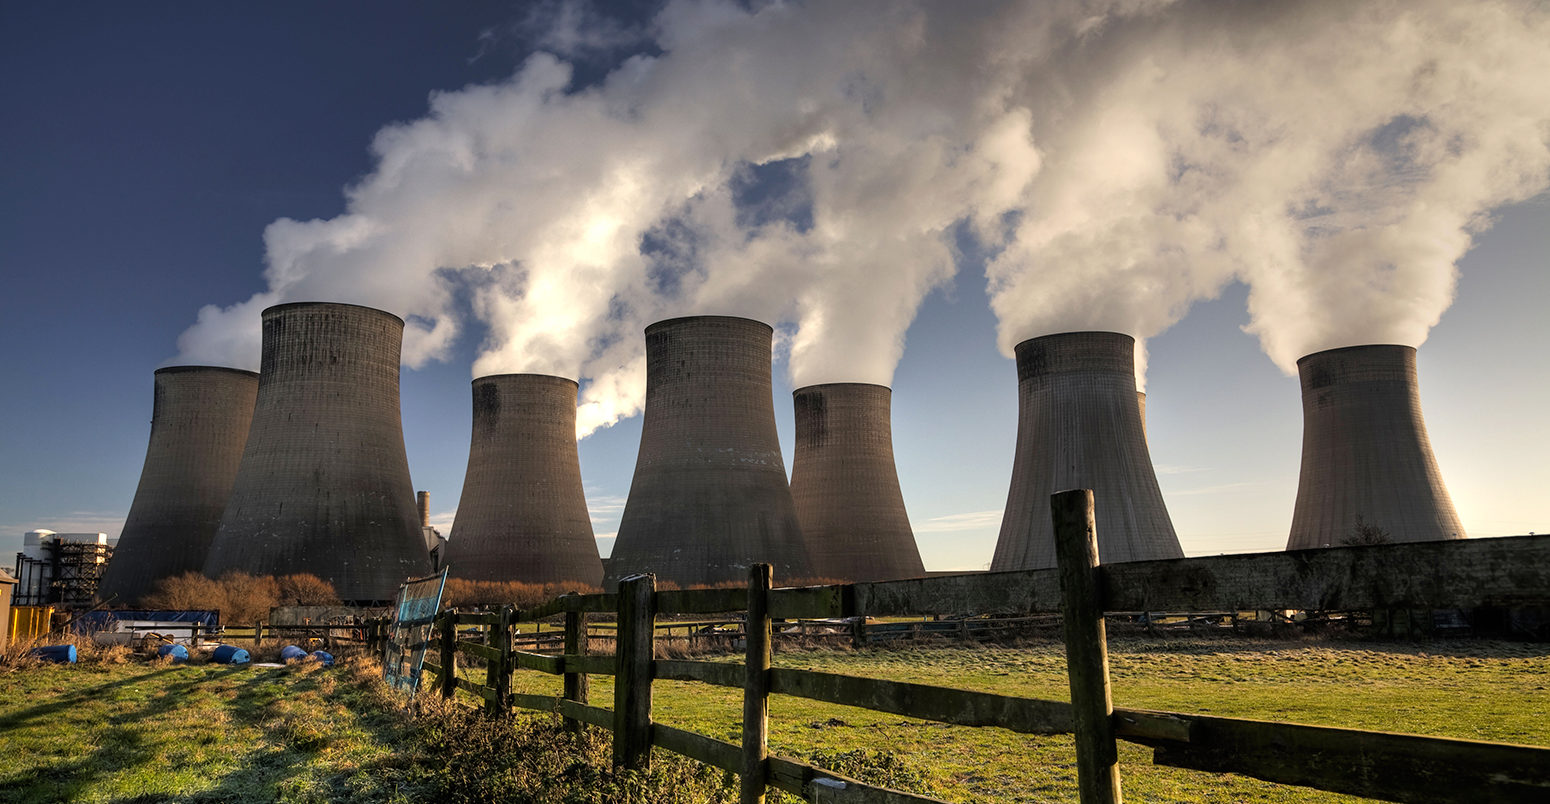 Ratcliffe on Soar coal fired power station. Ratcliffe, Nottinghamshire, UK